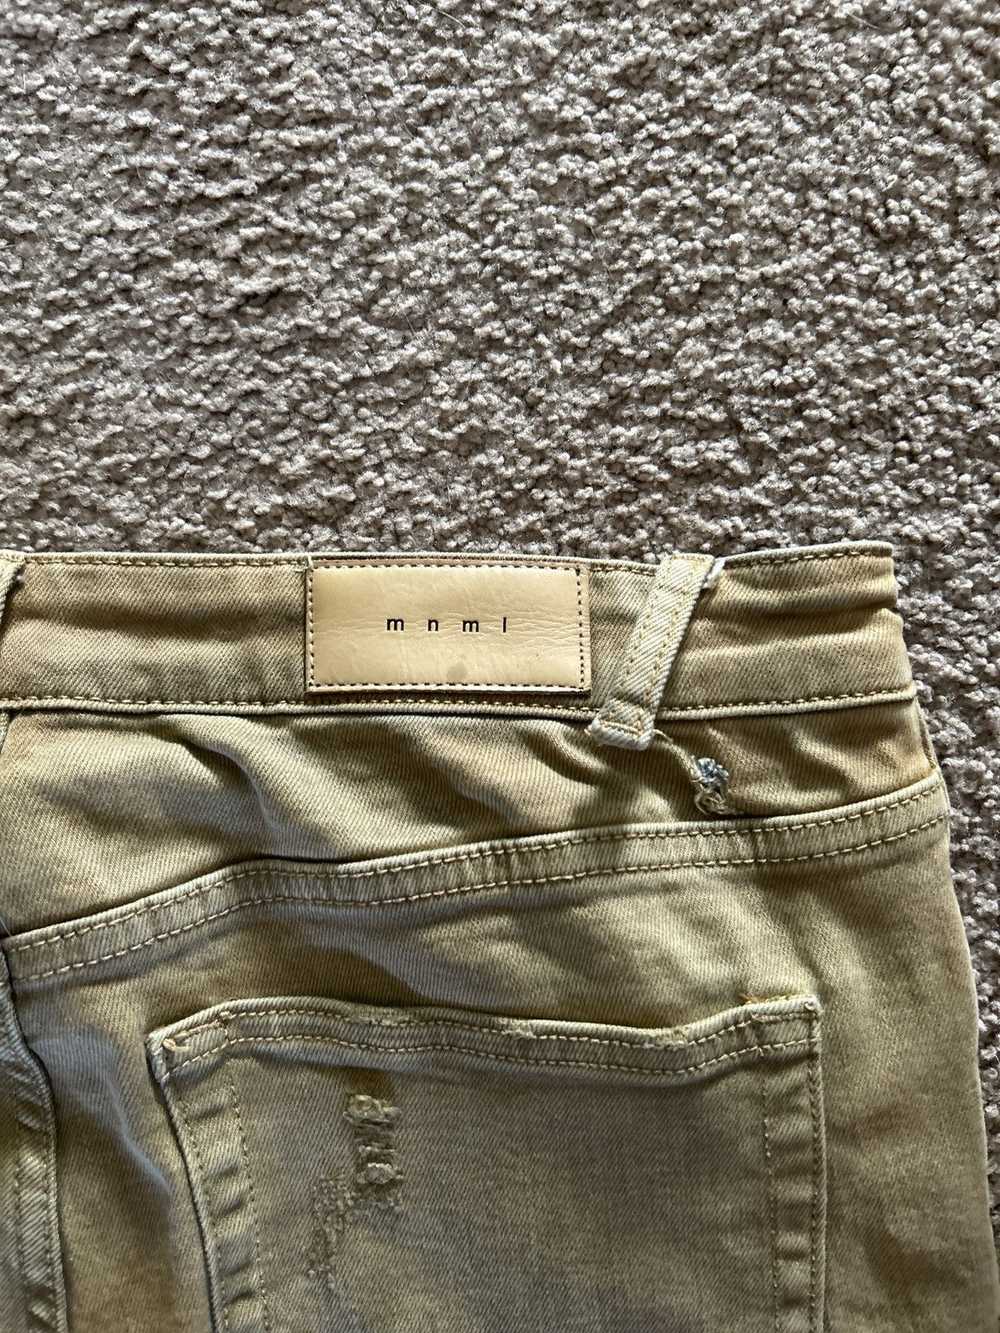 MNML Mnml brown distressed jeans - image 3